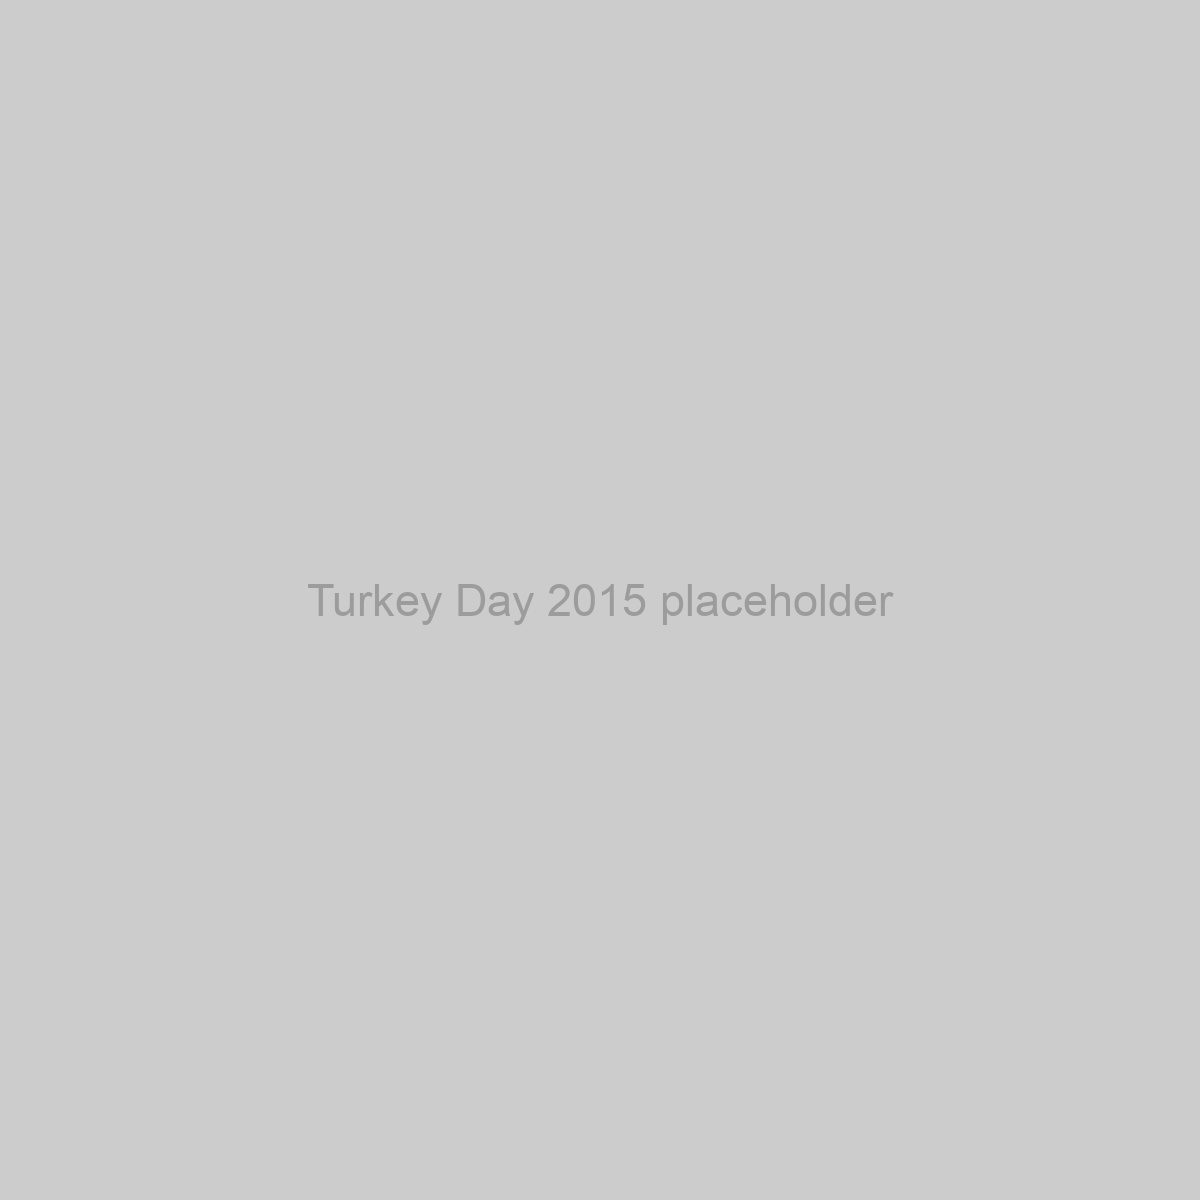 Turkey Day 2015 Placeholder Image